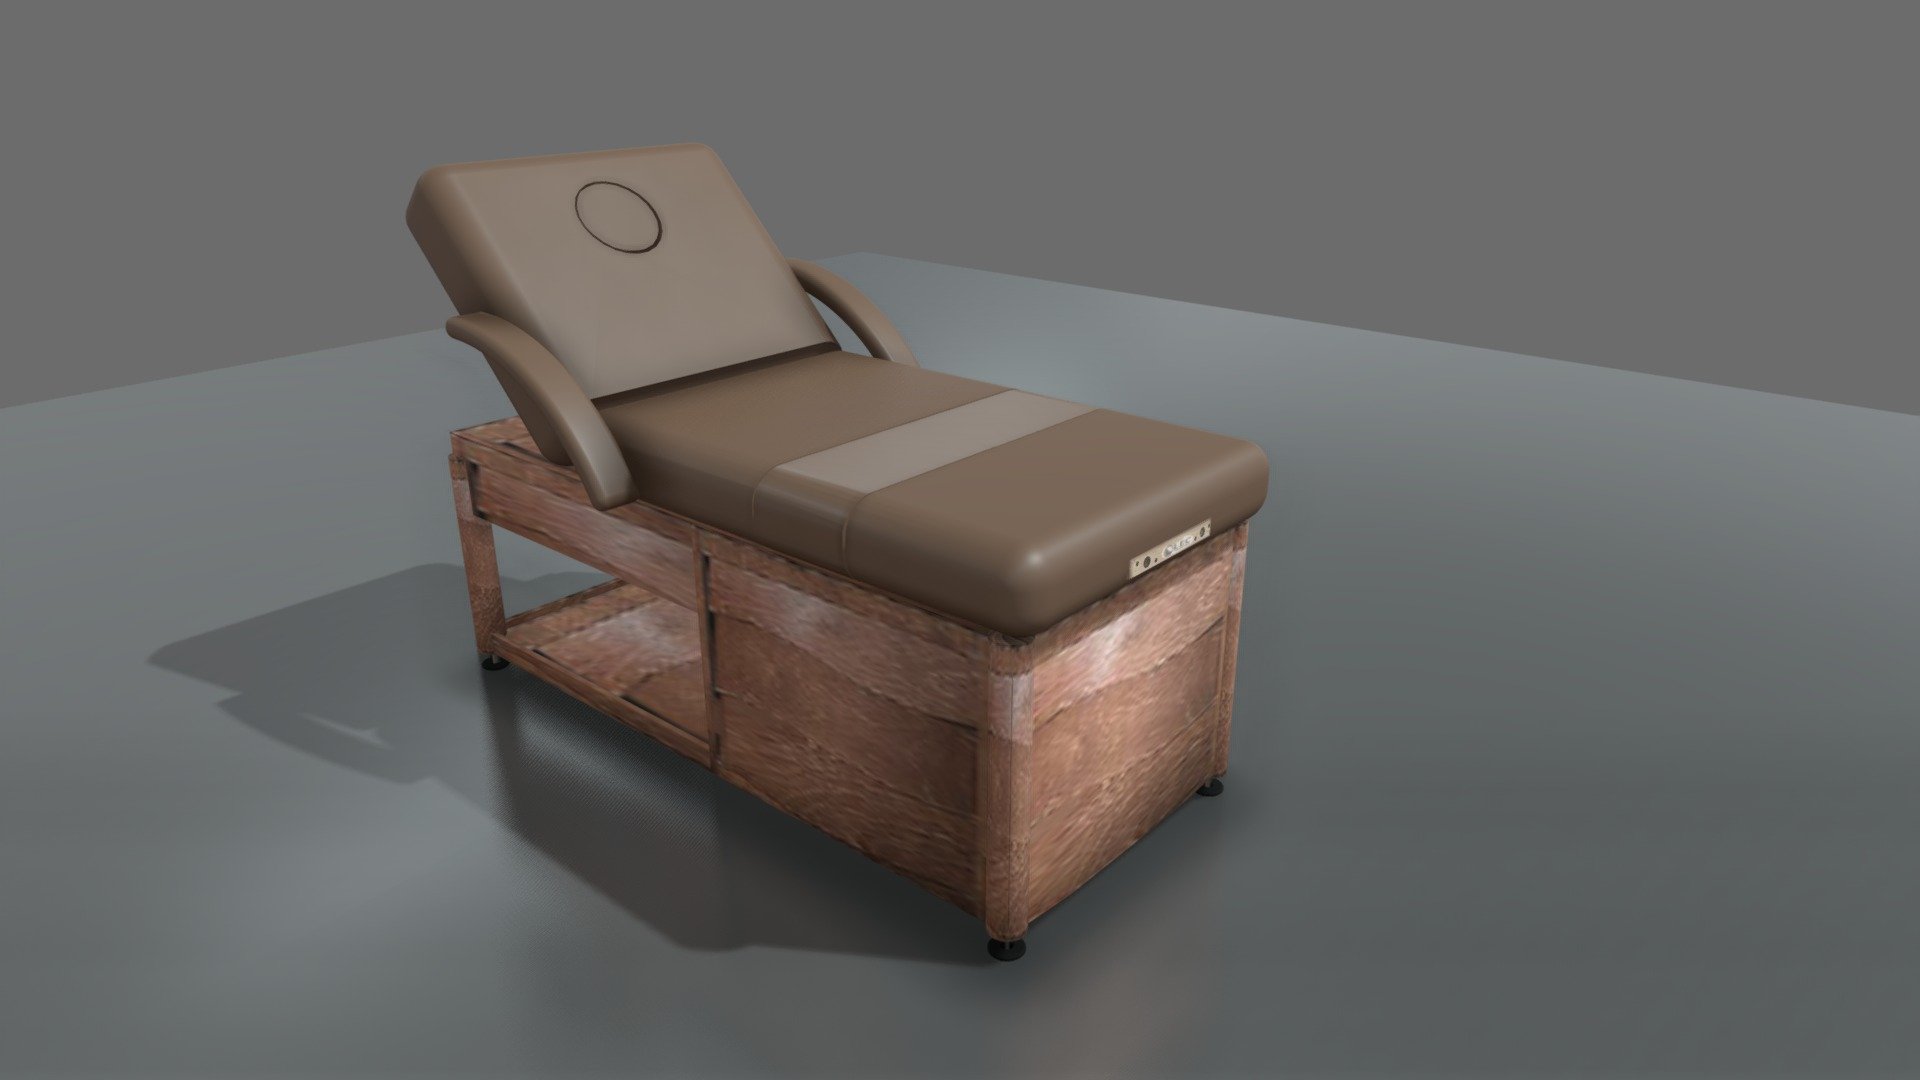 MASSAGE TABLE SPA - 3D model by CG Studios 3d model